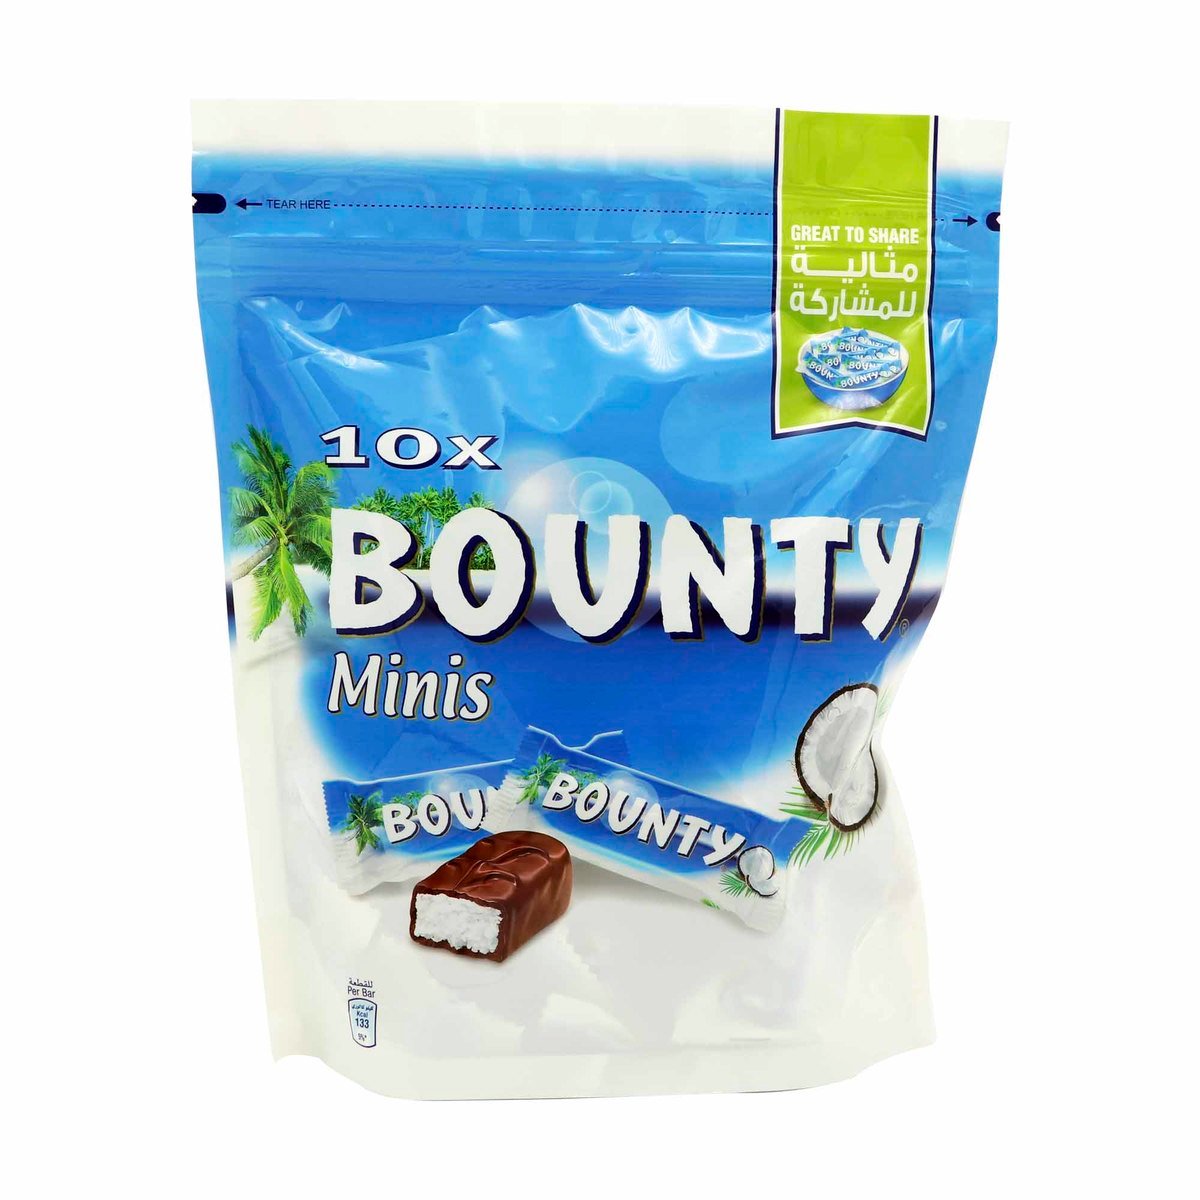 Bounty Minis Chocolate 275g